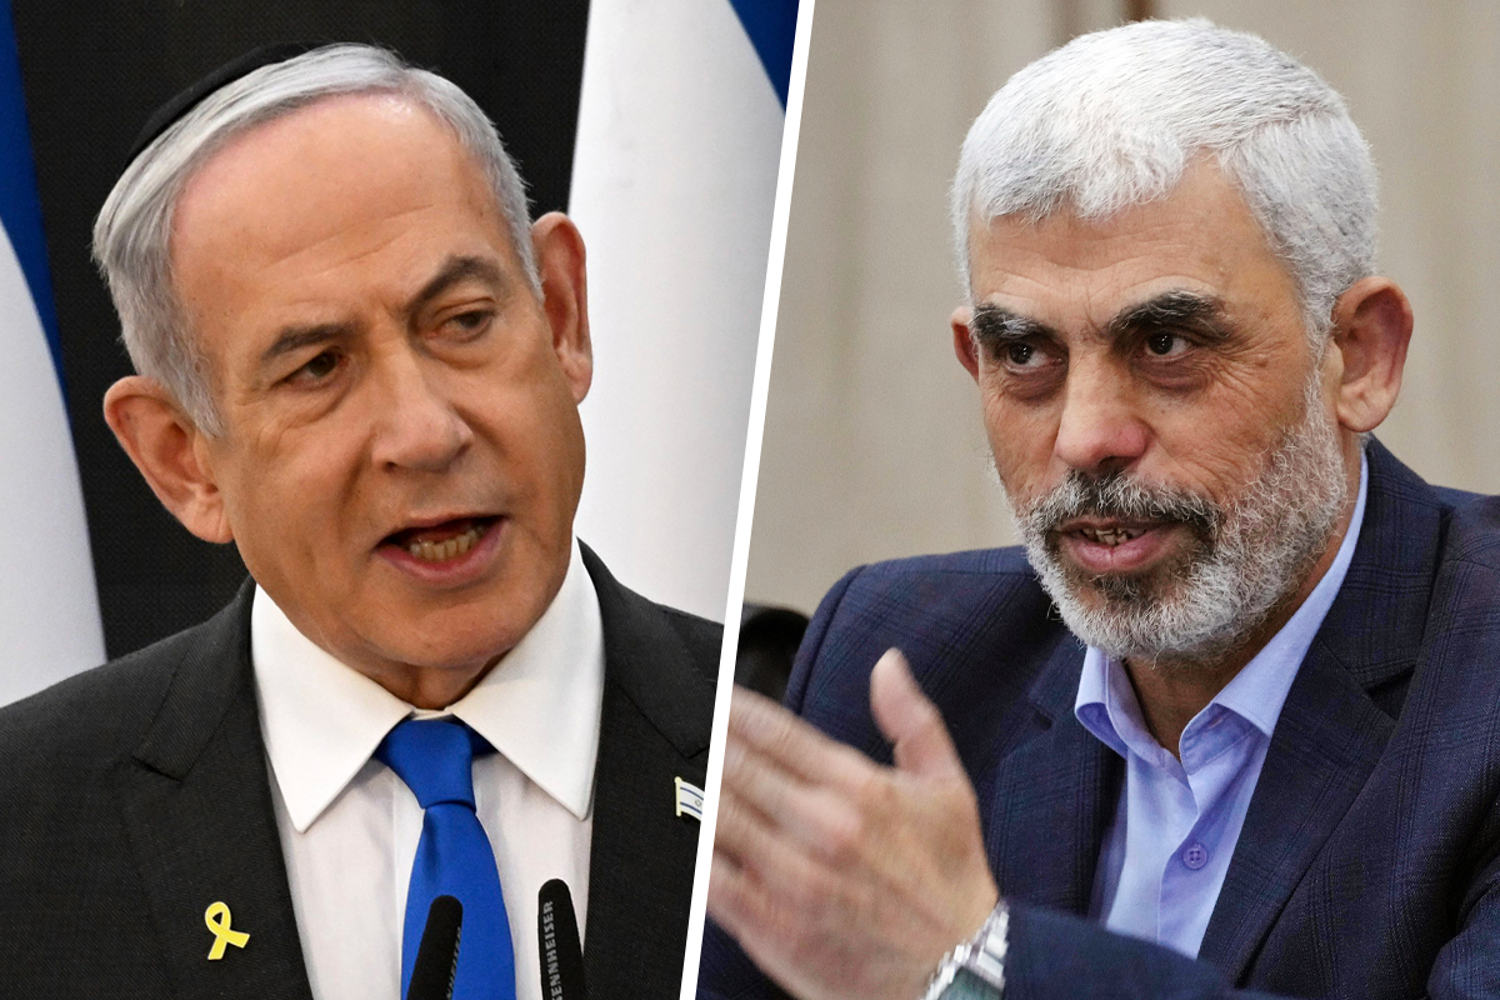 Biden says it's 'outrageous' that ICC seeking arrest warrants for Netanyahu and Israeli leaders